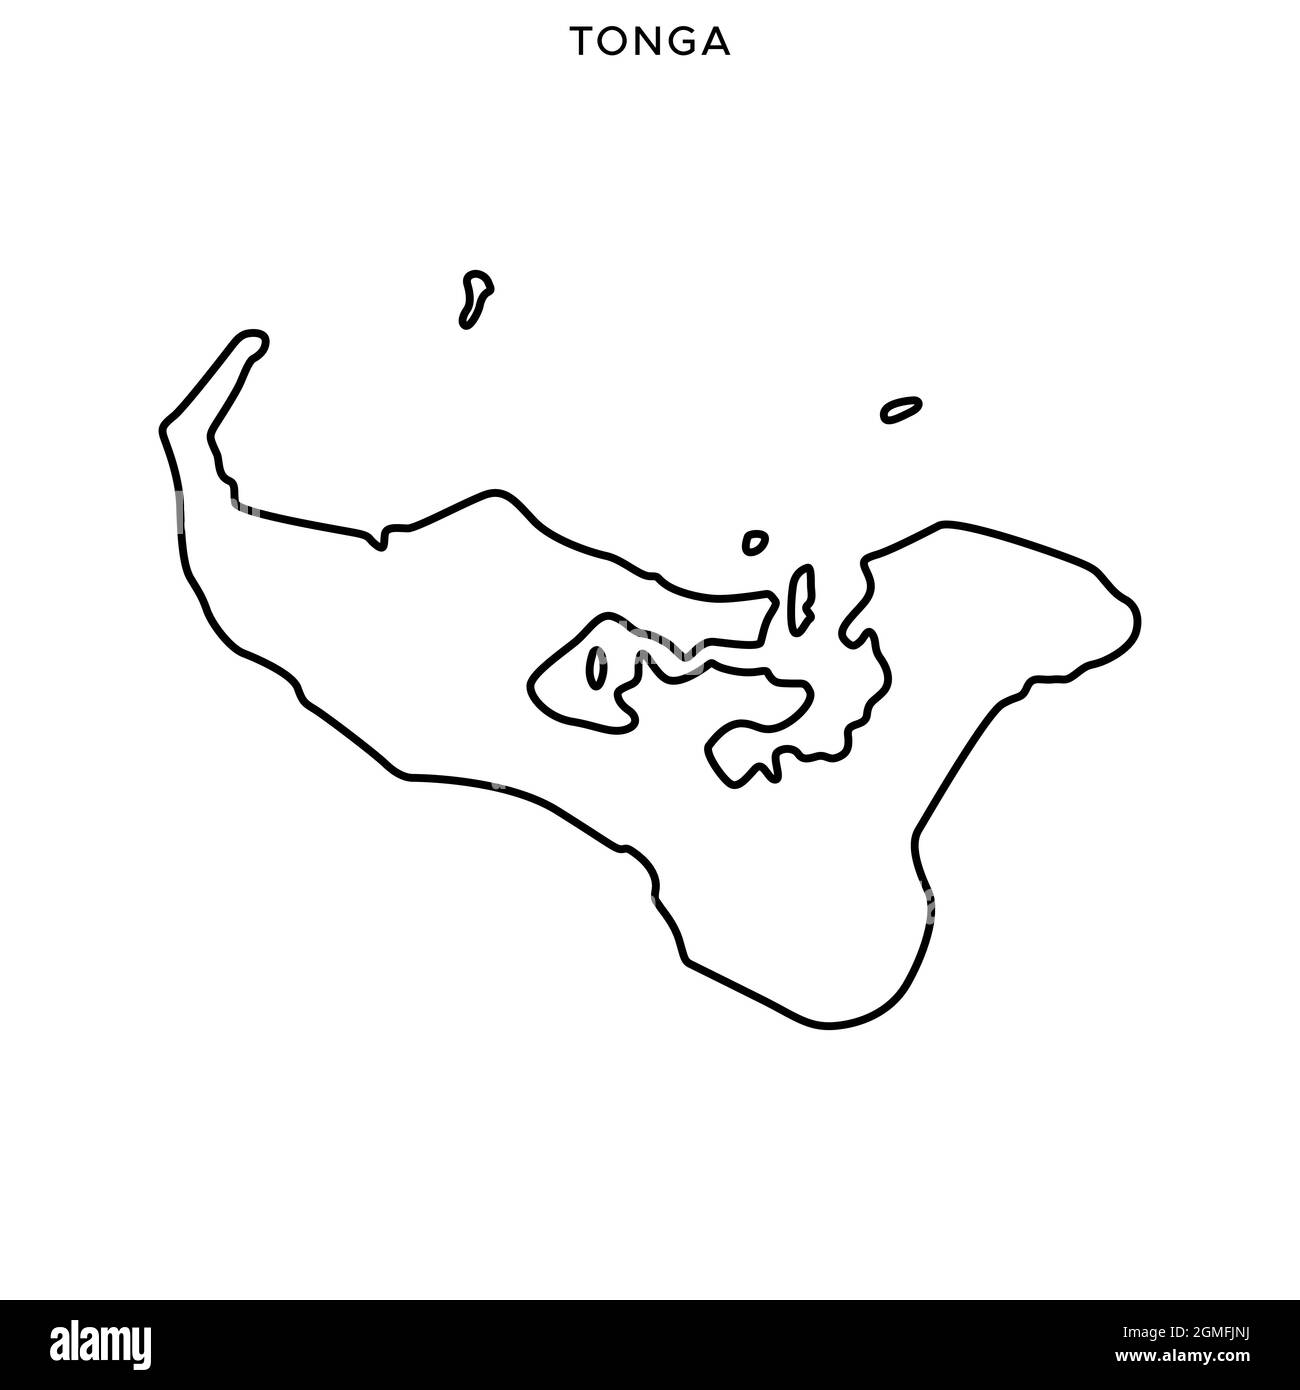 Linienkarte von Tonga Vektor-Stock Illustration Design-Vorlage. Bearbeitbare Kontur. Vektor eps 10. Stock Vektor